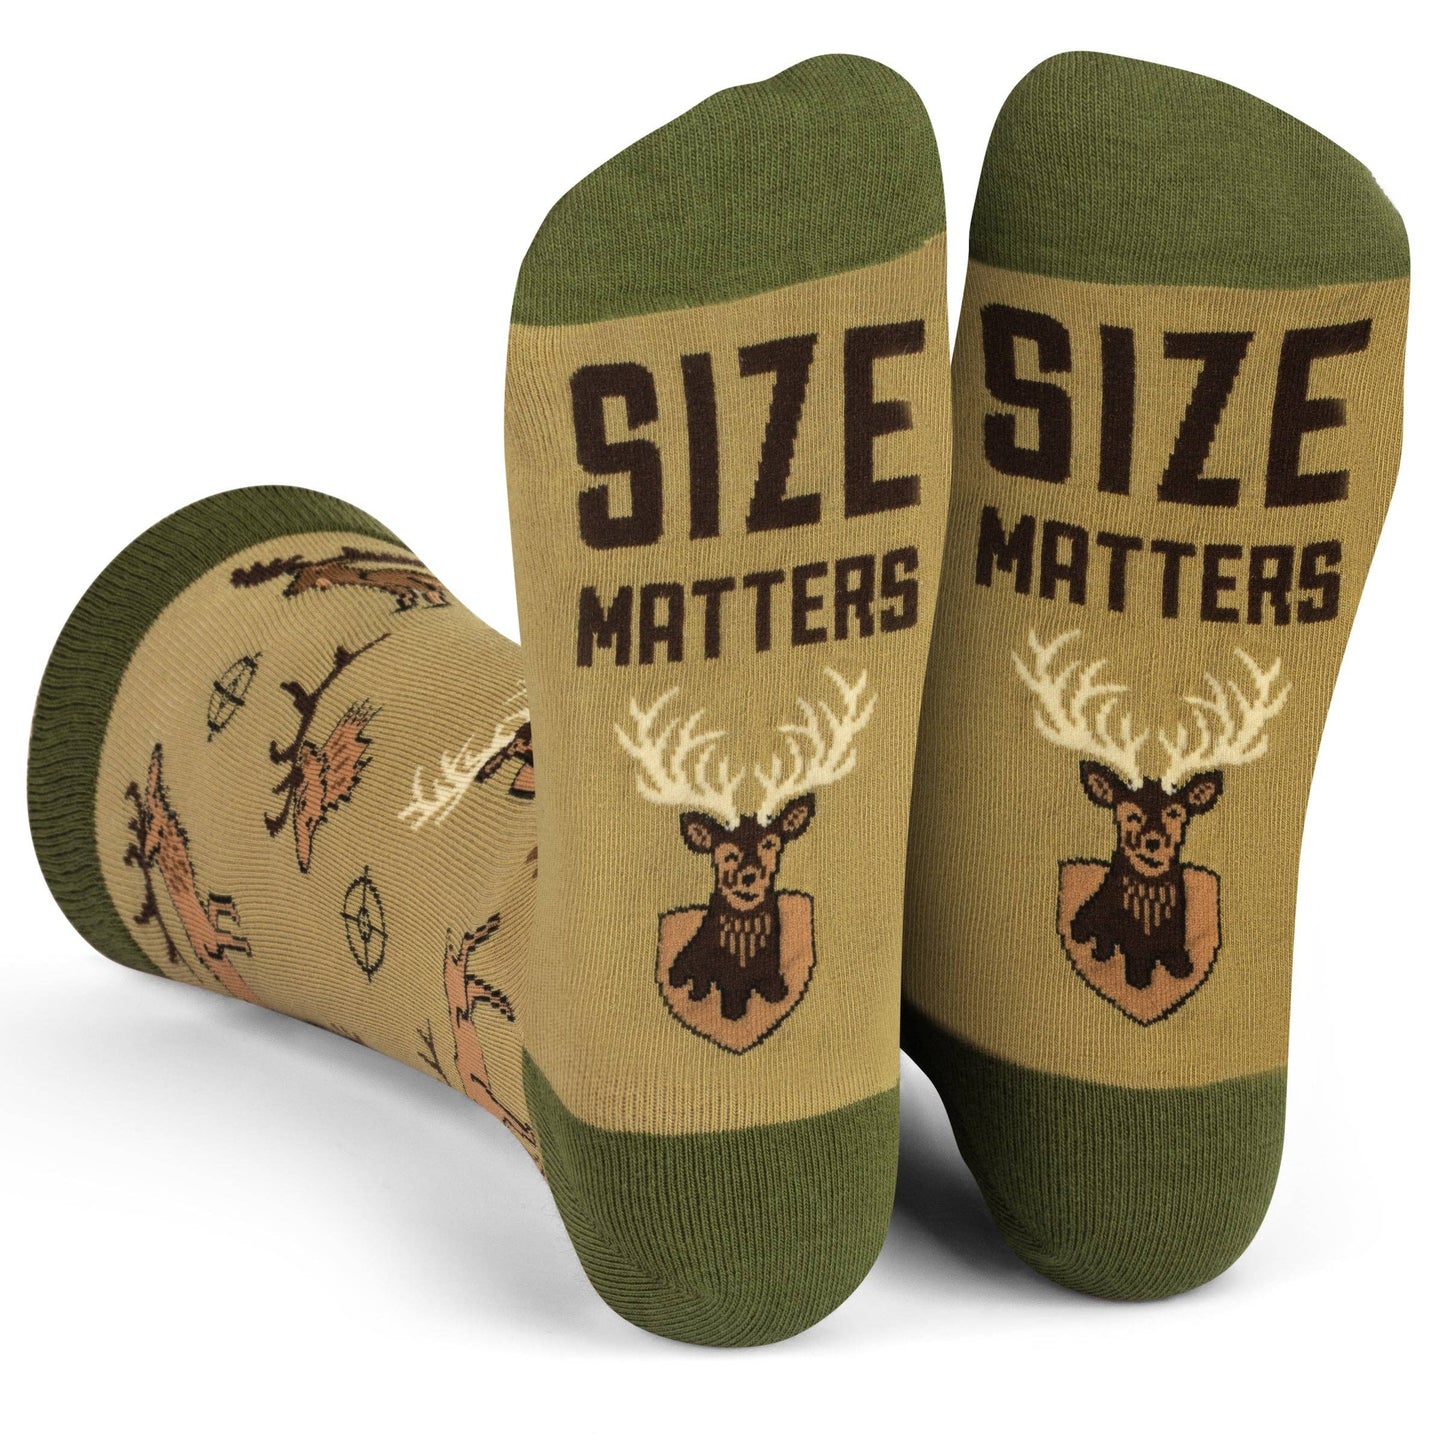 Lavley - Size Matters (Hunting) Socks